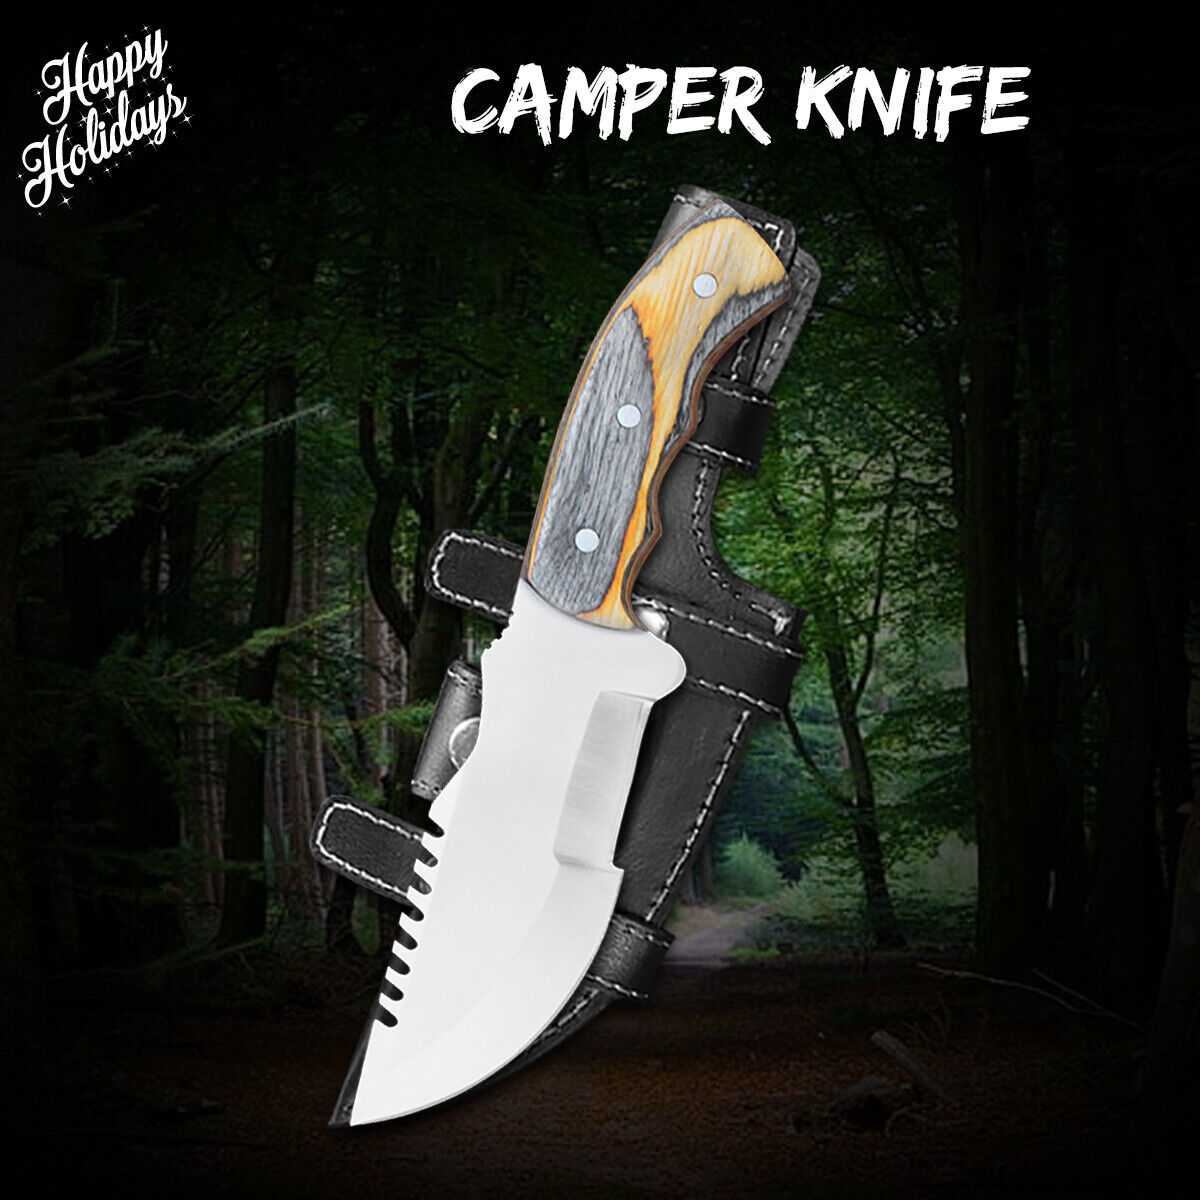 TRACKER® Camper Knife, Tracker Knife, Stainless Steel knife, Hunting Knife